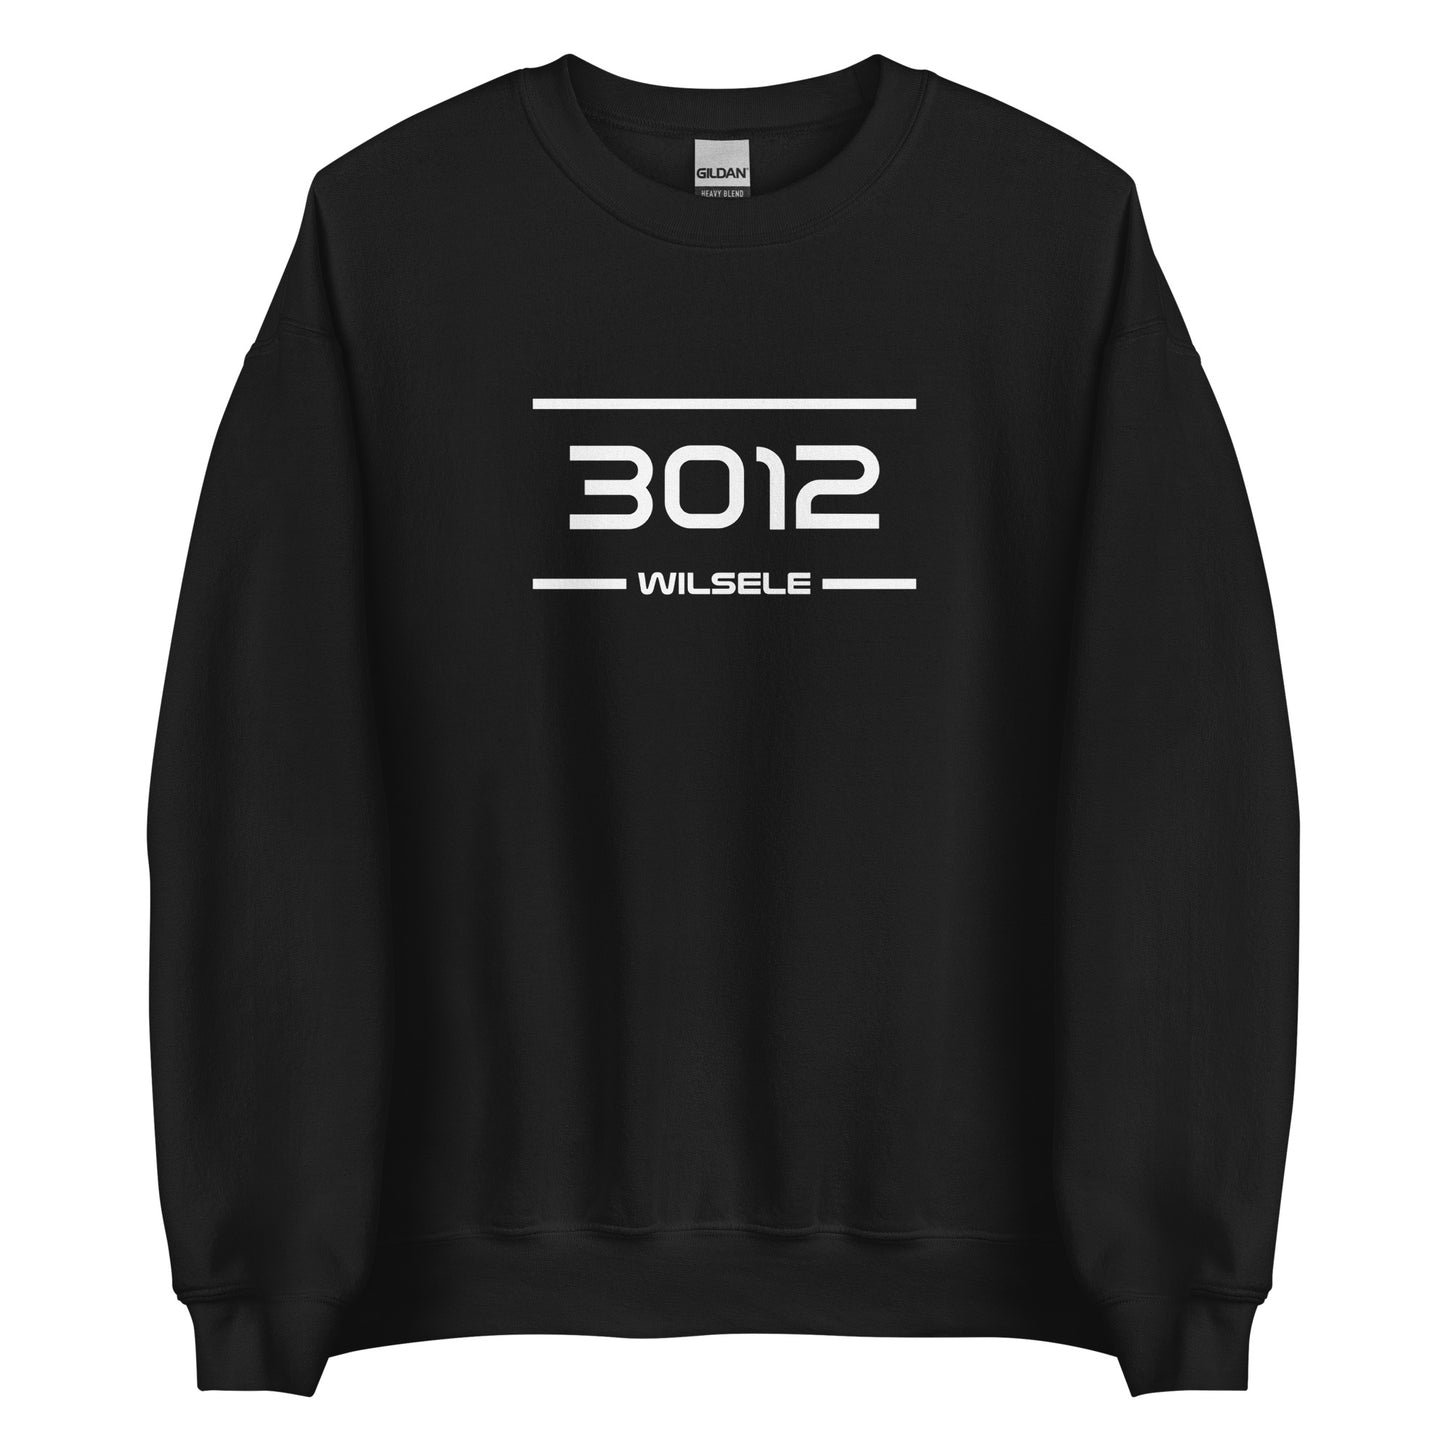 Sweater - 3012 - Wilsele (M/V)